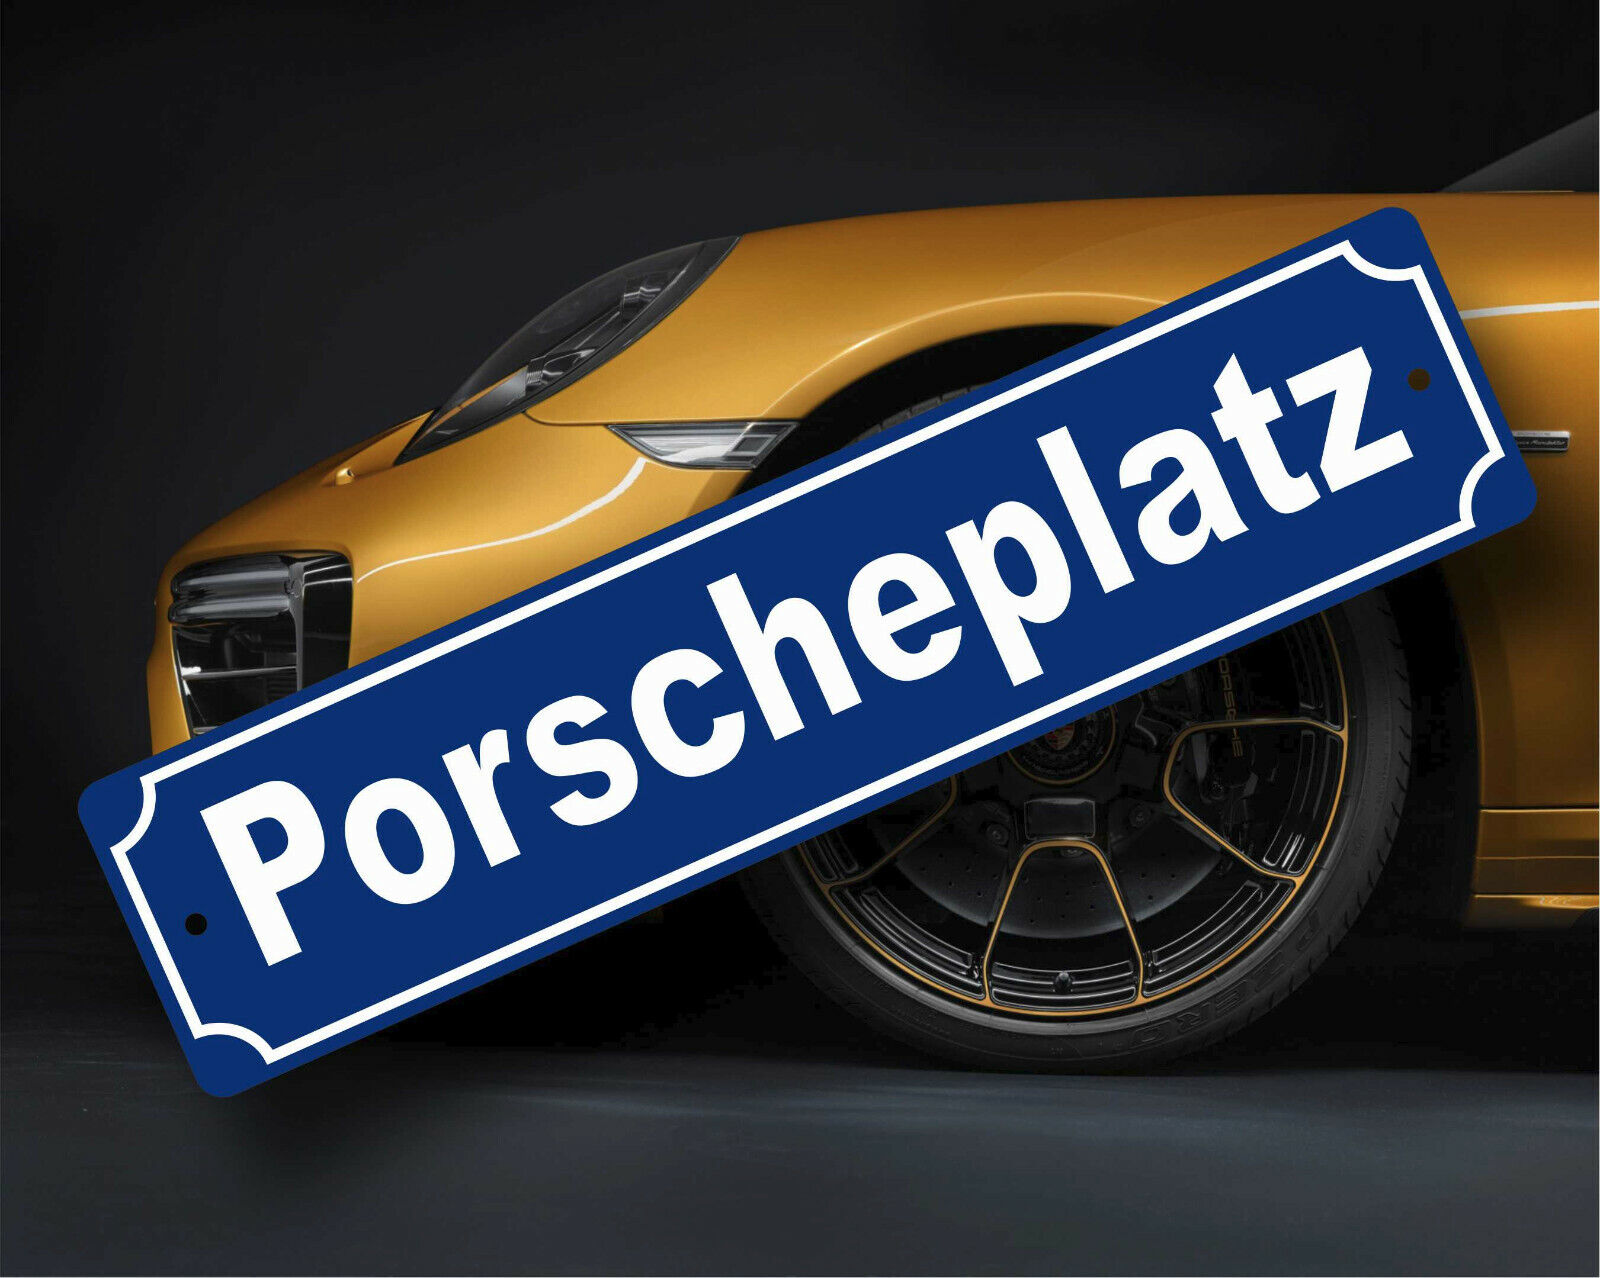 Porscheplatz - Stuttgart Street Sign - German Automobila - European Garage Art  